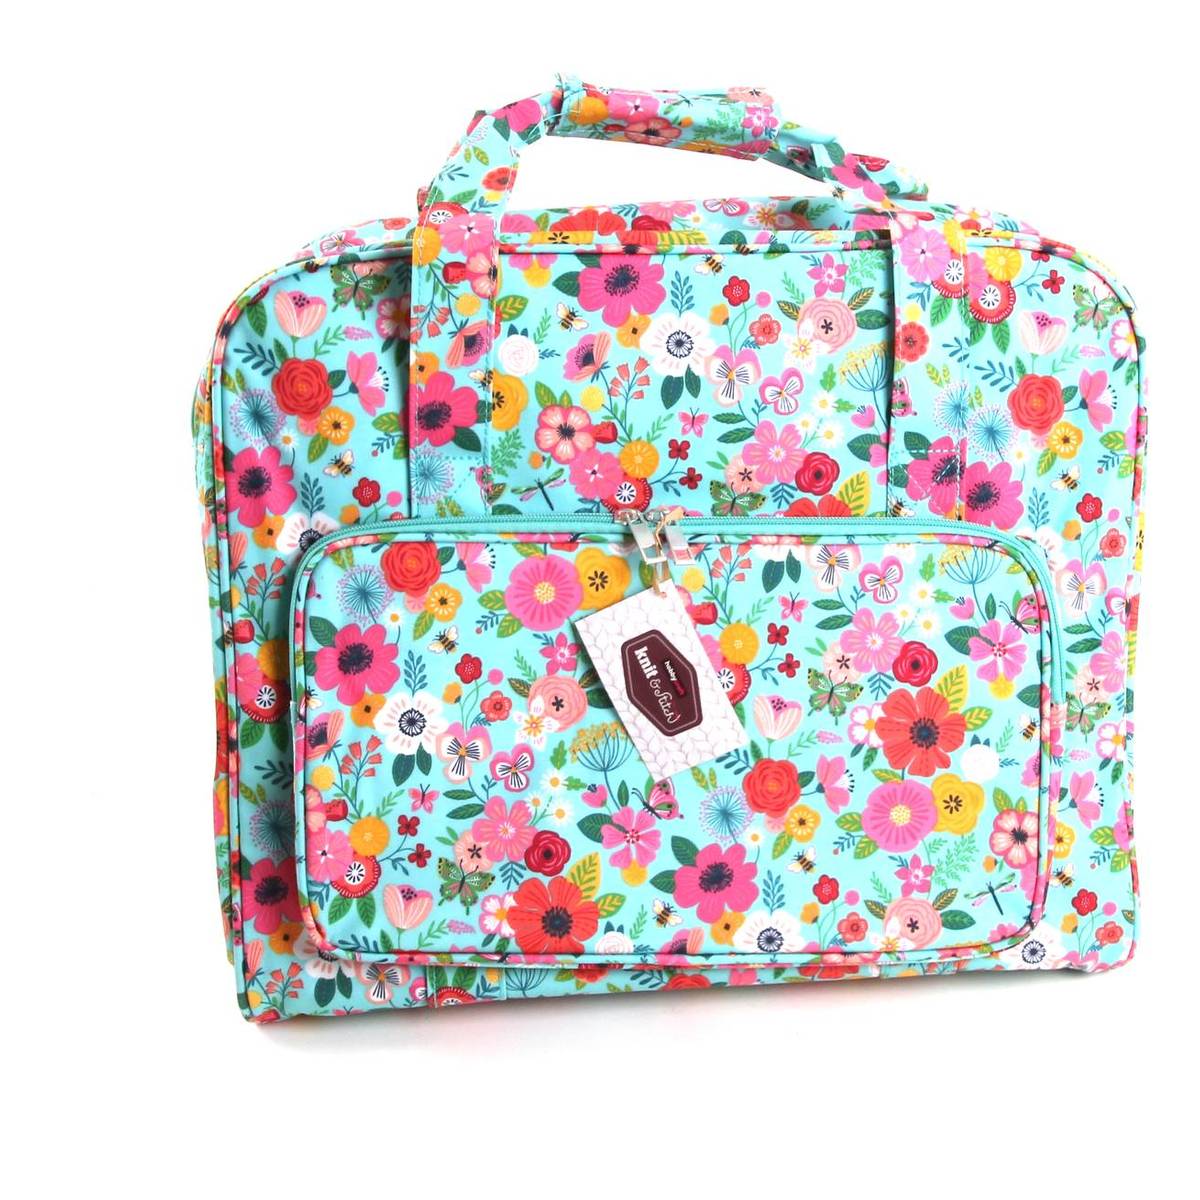 Teal Floral Garden Sewing Machine Bag | Hobbycraft